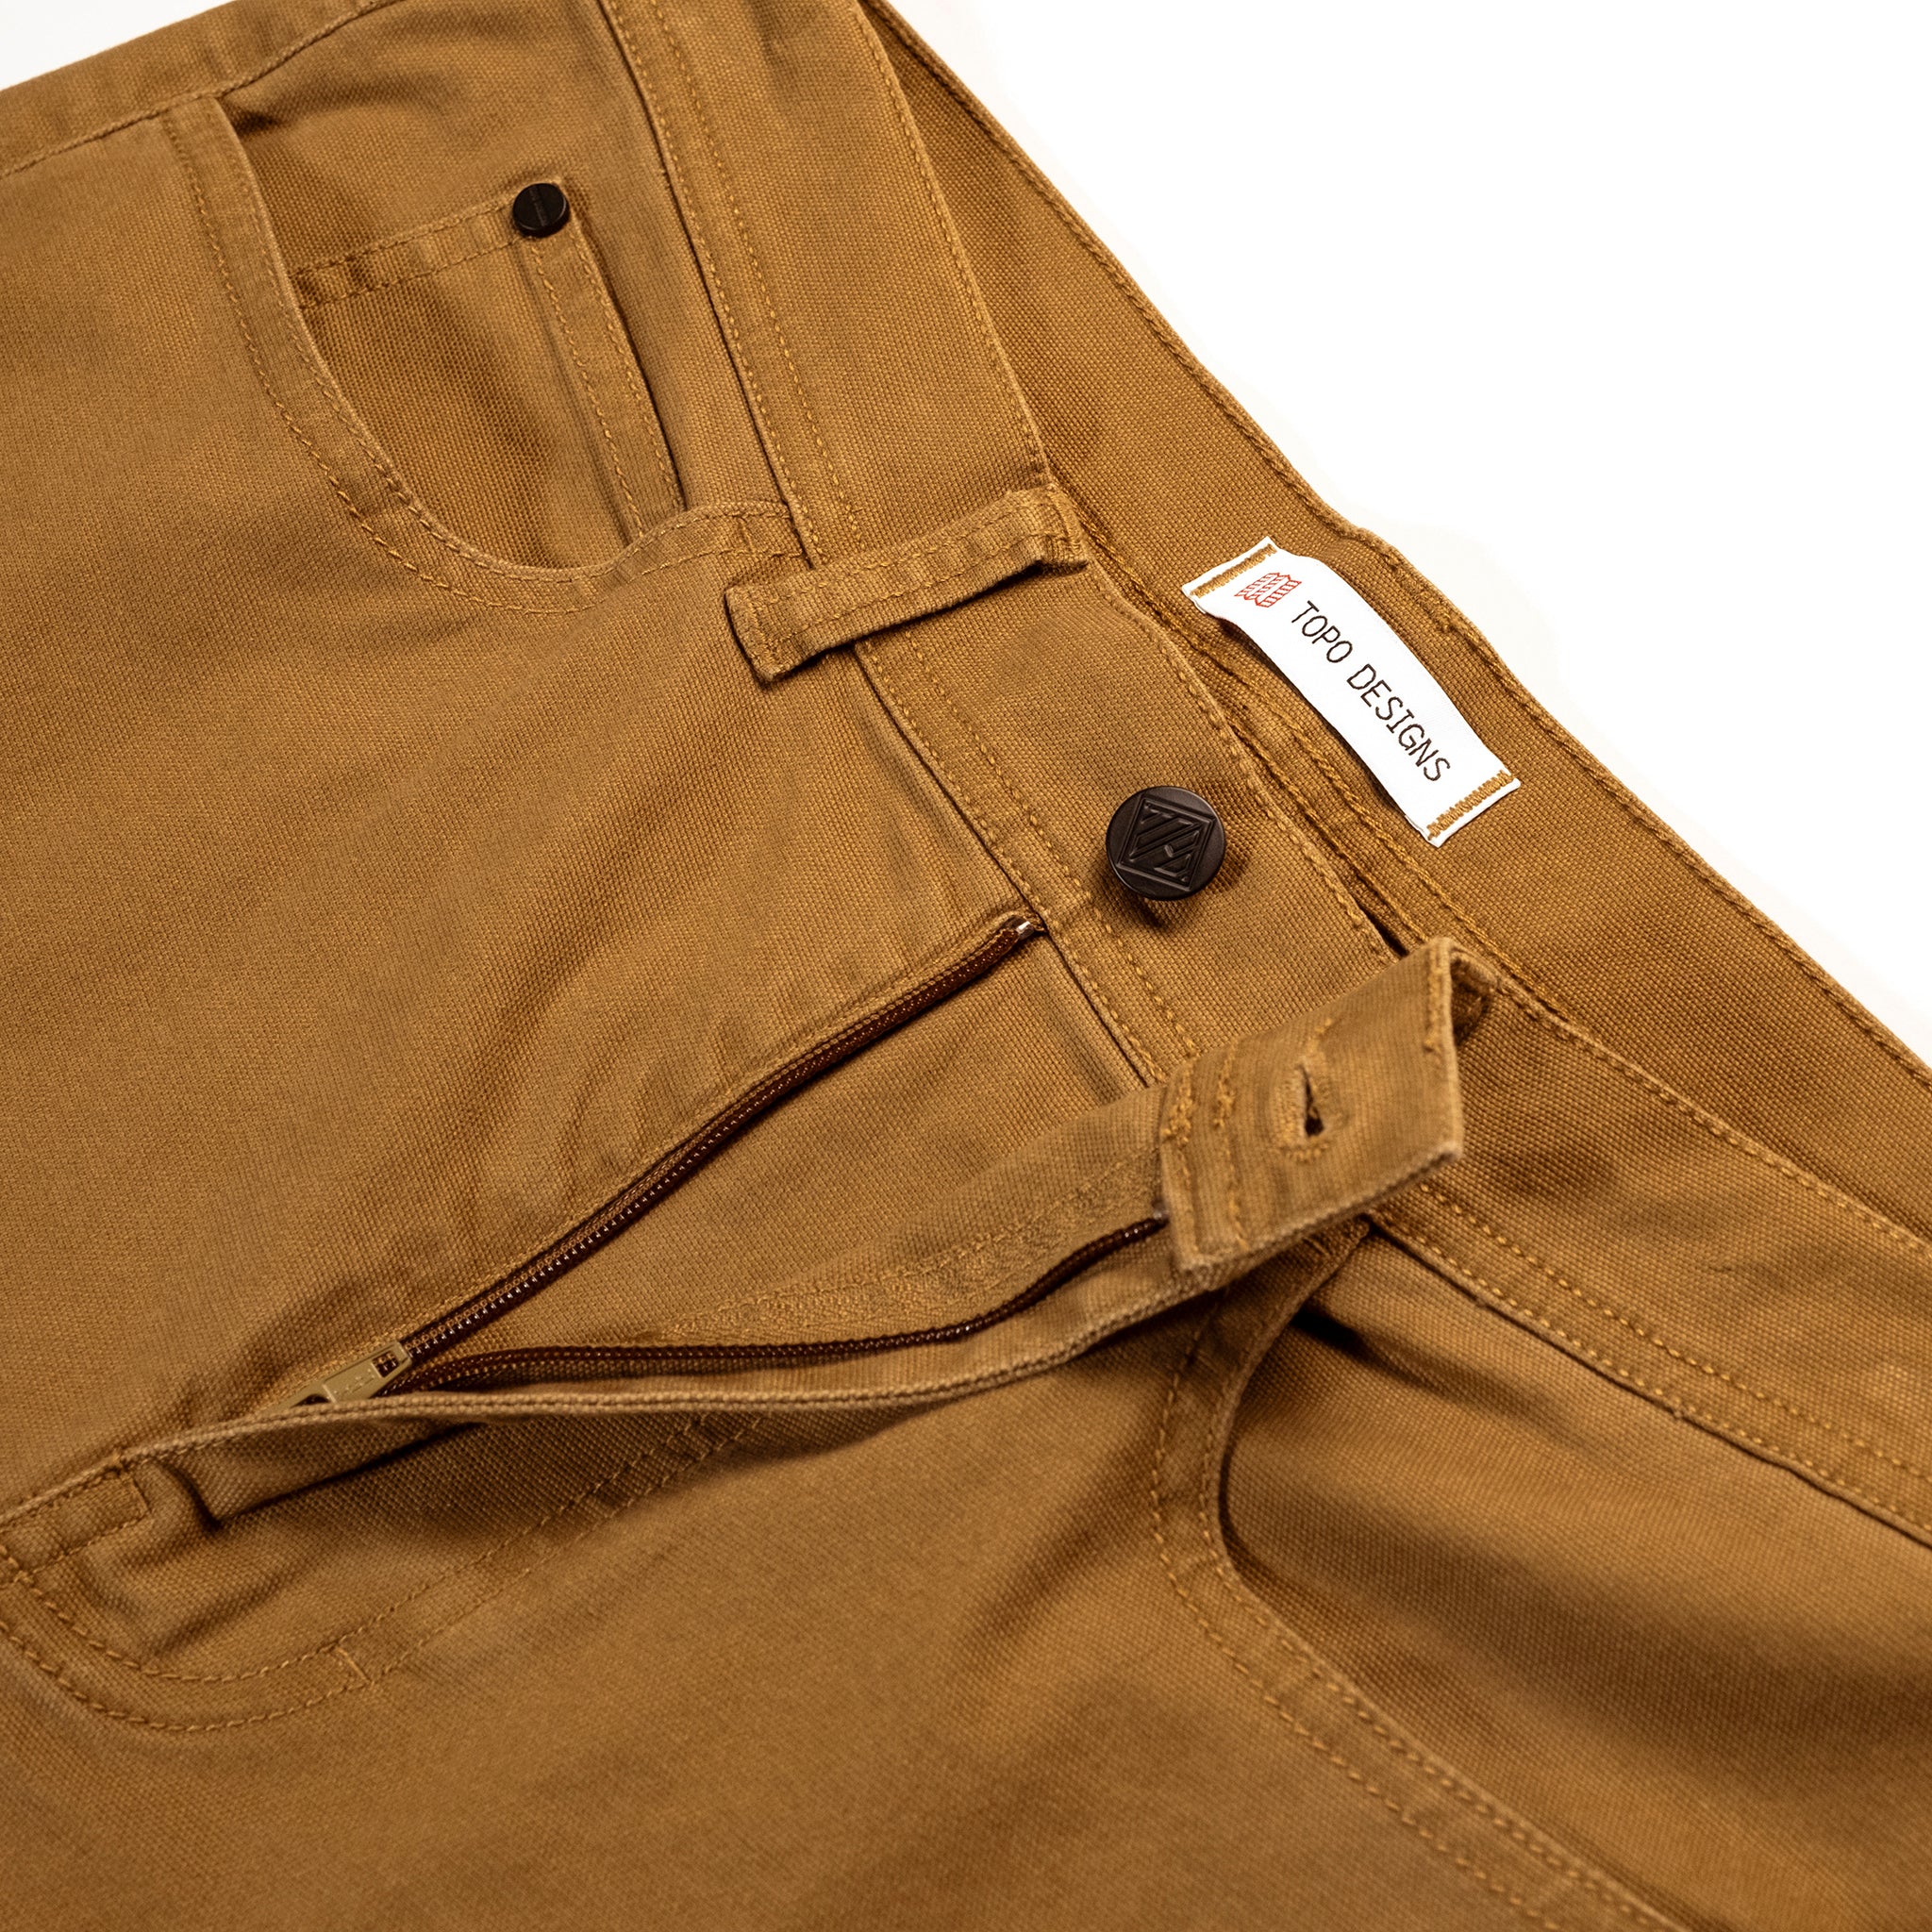 Topo Designs, M's 5 Pocket Pants - Twill